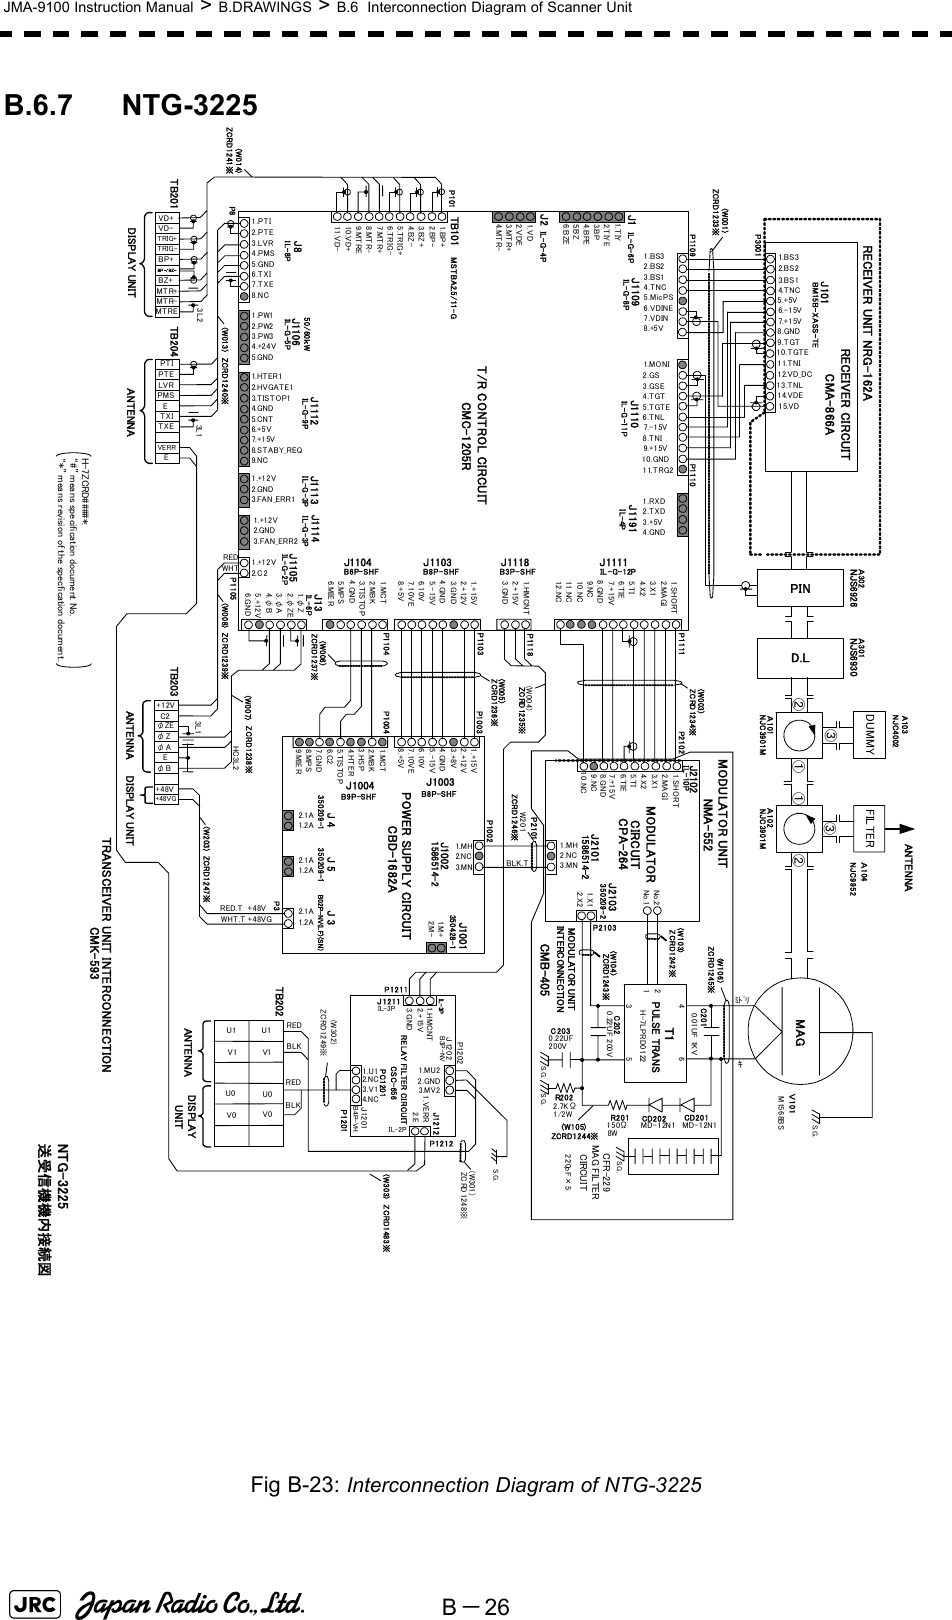 B－26JMA-9100 Instruction Manual &gt; B.DRAWINGS &gt; B.6  Interconnection Diagram of Scanner UnitB.6.7 NTG-3225Fig B-23: Interconnection Diagram of NTG-3225 NTG-3225送受信機機内接続図14.VDE12.VD_DC15.VD9.TGT10.TGTE13.TNL11.TNI1. BS 32. BS 23. BS 14. T NC5.+5V6.-15V7.+15VRECEIVER UNIT NRG-162ARECEIVER CIRCUIT CMA-866AJ101BM15B-XASS-TET/R CONTROL CIRCUITCMC-1205R1. MO N I2.GS3.GSE4.TGT5.TGTE6.TNL7.-15V8.TNI9.+15V10.GND11.TRG21.BS32.BS23.BS14.TNC5.MicPS6.VDINE7.VDIN8.+5V1.RXD2.TXD3.+5V4.GND1. S HO RT2.MAGI3. X 14. X 25. T I6. T IE7.+15V8.GND9.NC10.NC11.NC12.NC1.HMCN T2.+15V3.GND1.+15V2.+12V3.G ND4.GND5.-15V6.10V7.10VE8.+5V1.MCT2.MBK3. T IS TO P4.GND5.MPS6.MIE R1.TIY2.TIYE3.BP4.BPE5.BZ6.BZE1.+12V2.GND3.FAN_ERR11.HT ER 12. HV GA T E13. T IS T O P14.GN D5.CN T6.+5V7.+15V8. S T A BY _R E Q9.NC1.PW12.PW23.PW34.+24V5.GND1.PTI2.PTE3.LVR4.PMS5.GND6.TXI7.TXE8.NC1. BP +2. BP -3.BZ +4.BZ -5.TRIG+6.TRIG-7.MTR+8.MTR-9. MT R E10.VD+11.VD-1.VD2.VDE3.M T R+4.M T R-J1118J1103J1104 J1111J1191J1110J1109TB101J8 J1106J1112 J1113IL-G-12PIL-8PIL-G-8P IL-G-11PB6P-SHFIL-G-9PMSTBA2.5/11-GIL- G -5PB3P-SHFIL-4PB8P-SHFIL-G-3PMAGPOWER SUPPLY CIRCUITCBD-1682A1.+15V2.+12V3.+8V4.GND5.-15V6.10V7.10VE8.+5V1.MCT2.MBK3.HSP4.HT ER5. T IS TO P6.C27.G ND8.MPS9.MIE R2.1 A1.2 A2.1 A1.2 A2.1 A1.2 A1.MH2.NC3.MN1.MH2.NC3.MN1. X 12. X 2No.2No.1214356FILTERJ1004 J1003J 5J 4 J 3J1001J1002J2102J2101J2103ANTENNA1.S H O R T2.M AG I3.X 14.X 25.T I6.T IE7.+15VB9P-SHF B8P-SHF1586514-2350209-1IL-10P350209-2350209-1350428-1MODULATOR CIRCUITCPA-264MODULATOR UNIT INT ERC ONN ECTIONCMB-405D.L①②③①②③ﾐﾄﾞﾘｷC2010.01UF 1KVC2020.22UF 200VR202 2.7KΩ1/2WC2030.22UF200VT1 R201150Ω8WH-7LPRD0122CD202 CD201MD-12N1MD-12N1NJC3901M NJC3901MＡ101 Ａ102P3001P1109 P1110P110 4P1103 P1003P1004P1111PULSE TRANSW201BLK.TP3P2103P1118DUMMYA103(W001)(W003)(W006)P10021.+12V2.GND3.FAN_ERR2J1114IL-G-3P1.+12V2.C 2J1105IL-G-2PP1105MODULATOR UNITNMA-552P8TRANSCEIVER UNIT INTERCONNECTIONCMK-593(W106)(W103)(W104)(W105)ZCRD1242※ZCRD1244※P1212J1IL-G-6PJ2IL-G-4PPTIPTELVRPMSETXITXEEVERRVD+VD-TRIG+TRIG-BP+BP -/ BZ-BZ+MTREMTR-MTR+TB201 TB204(W301)ZCRD1248※ZCRD1243※(W302)ZCRD1249※Ａ301NJS6930PINＡ302NJS6926ZCRD1234※ZCRD1245※ZCRD1233※ZCRD1246※ZCRD1235※(W004)(W005)ZCRD1236※ZCRD1237※1.φ Z2.φZE3.φA4.φ B5.+12V6.GNDJ13IL-6P50/60ｋWBLKREDBLKREDU1V1U0V0U1U0V1V0+12VC2φZEφZφAEφB+48V+48V+48VGRED.TWHT.TREDWHT(W008) ZCRD1239※ANTENNAANTENNADISPLAY UNITANTENNA DISPLAY UNIT(W203) ZCRD1247※(W007) ZCRD1238※HC3L23L13L13L2TB203TB202P2101P2102P1018.GND(W014)ZCRD1241※1.M+2.M-(W013) ZCRD1240※1586514-2NJC40029.NC10.NCB02P-NV(LF)(SN）S.G.S. G .S.G.8.G N DDISPLAY UNIT(W303) ZCRD1483※RELAY FILTER CIRCUITCSC-656PC1201IL - 3P1.HMCNT2.+15V3.GNDP1211P12021.MU2J12121.VERR2.E3.MV2J1202J1201J12111.U13.V12.NC4.NC2.GNDB4P-VHB3P-NVIL-3PIL-2PP1201S.G.M1568BSＶ101NJC9952Ａ104CFR-22 9MAG FILTER CIRCUITS.G.220pF×5+48VGH-7 ZCRD####*:“#” means specifi cation document No.“*” mea ns revisi on of the specfication document.